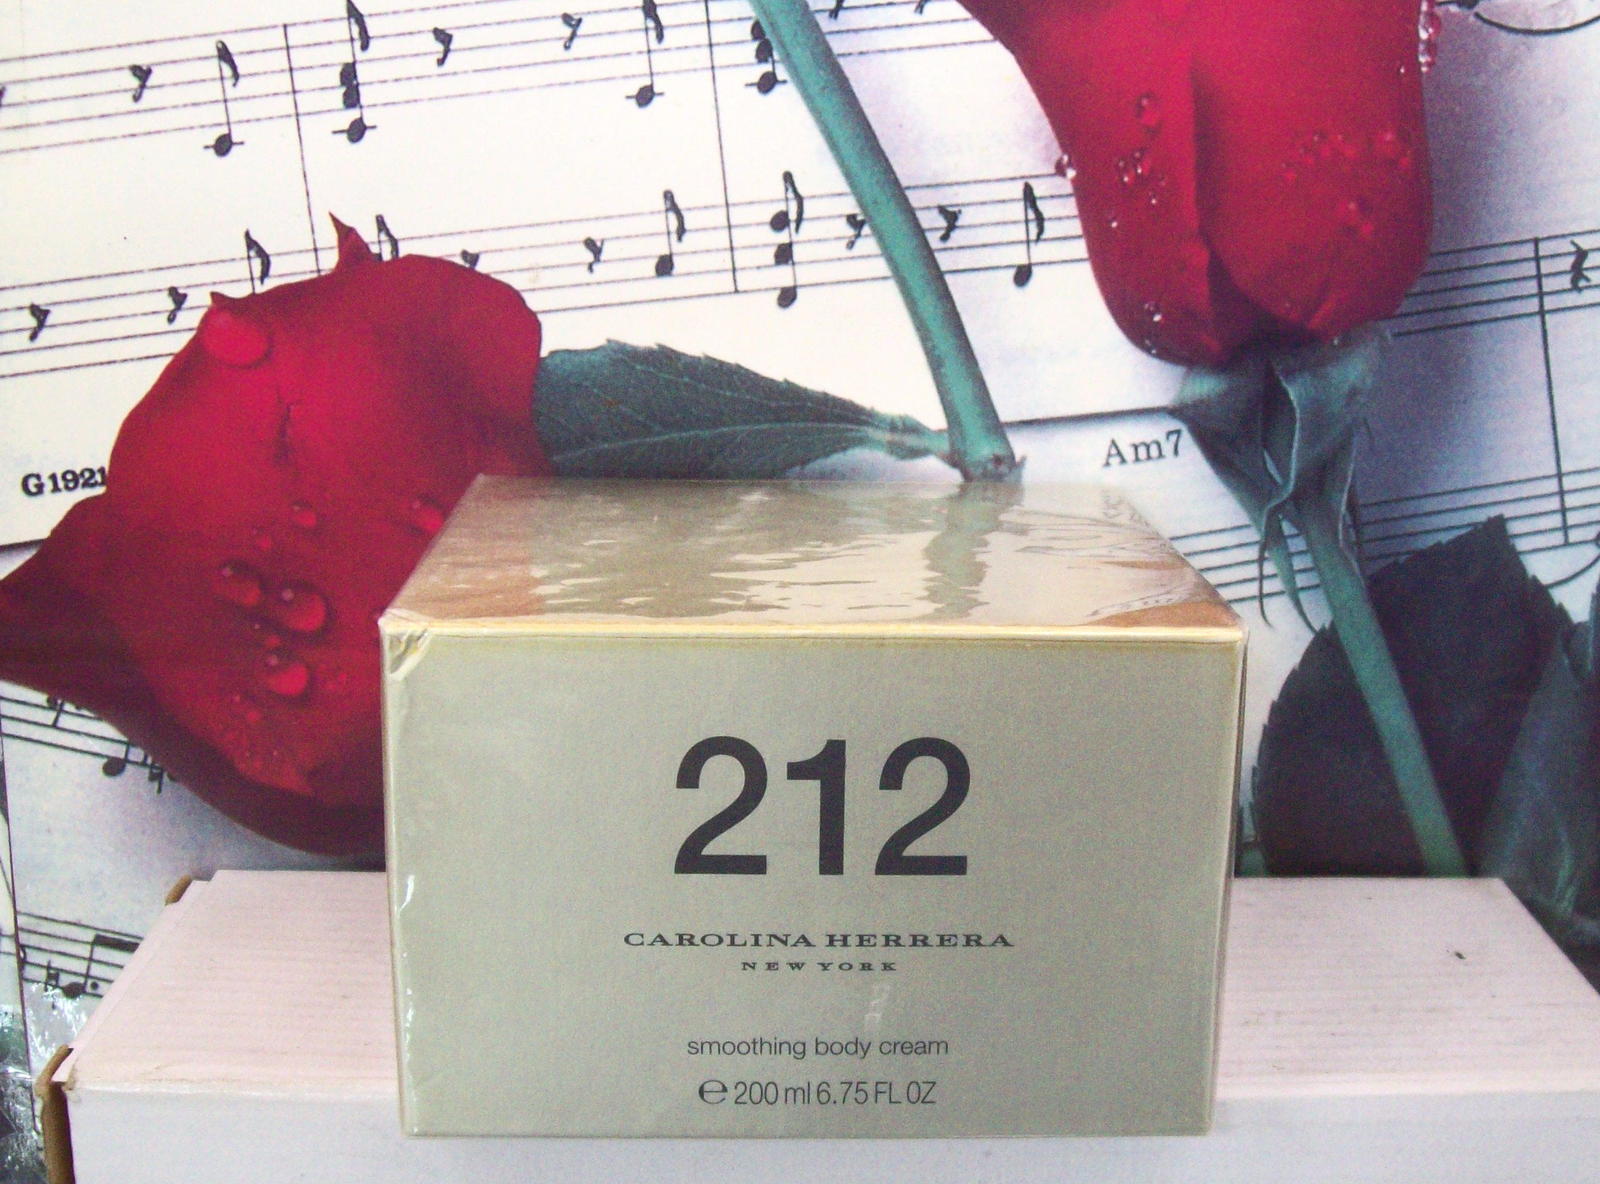 212 For Women By Carolina Herrera Smoothing Body Cream 6.75 FL. OZ. - $119.99